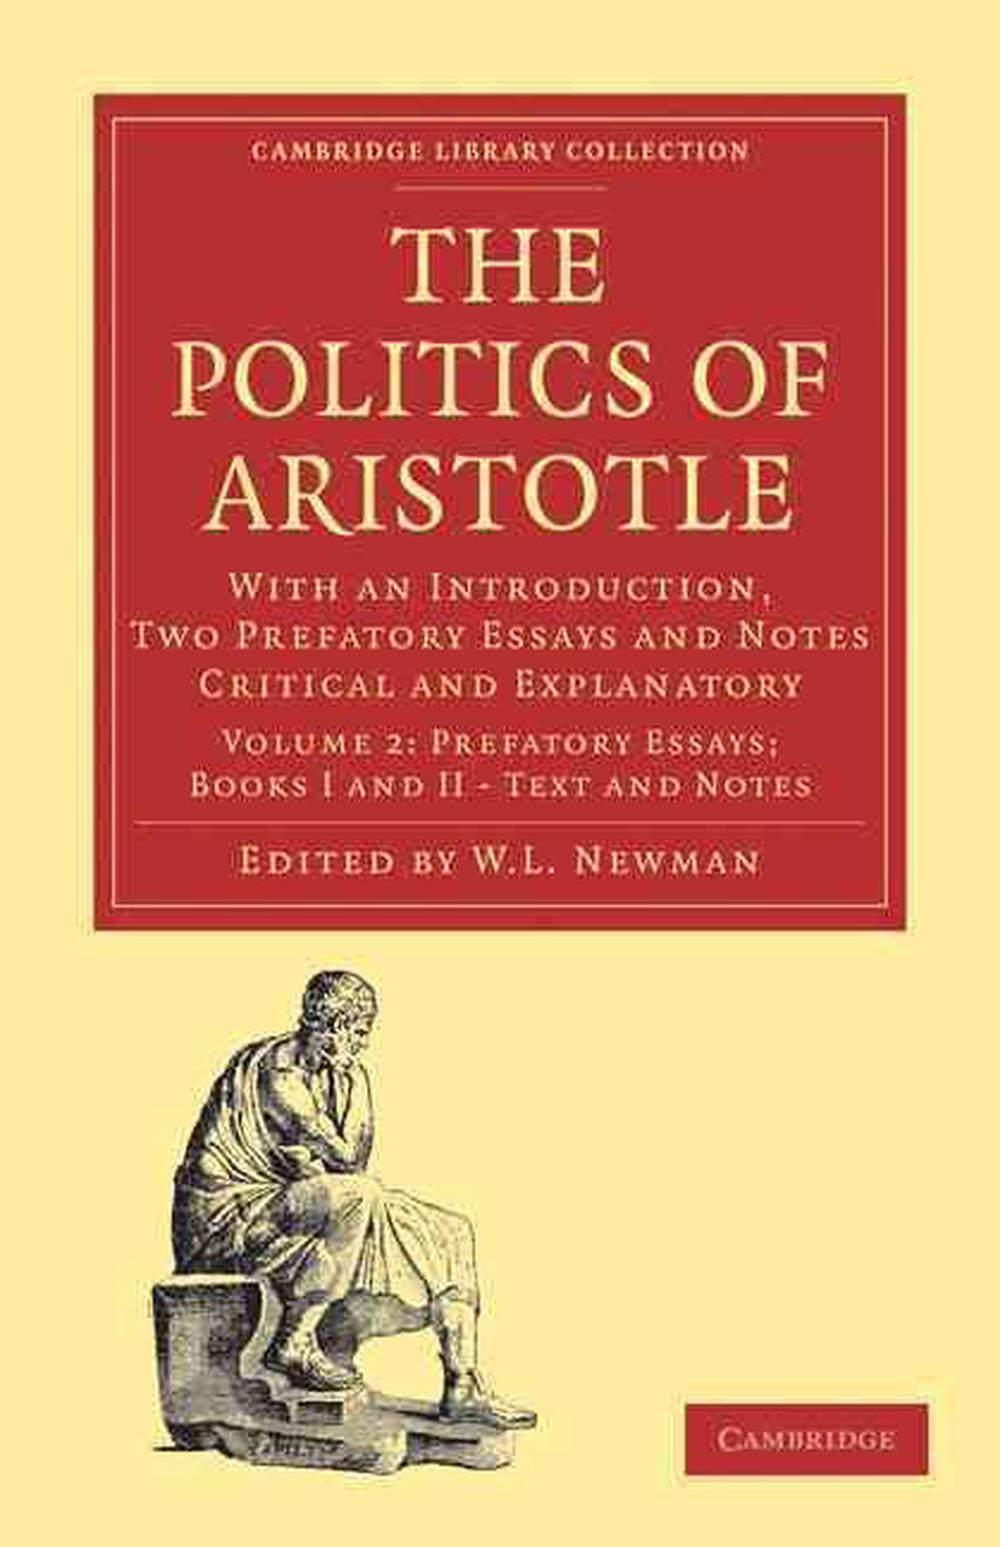 aristotle politics essay